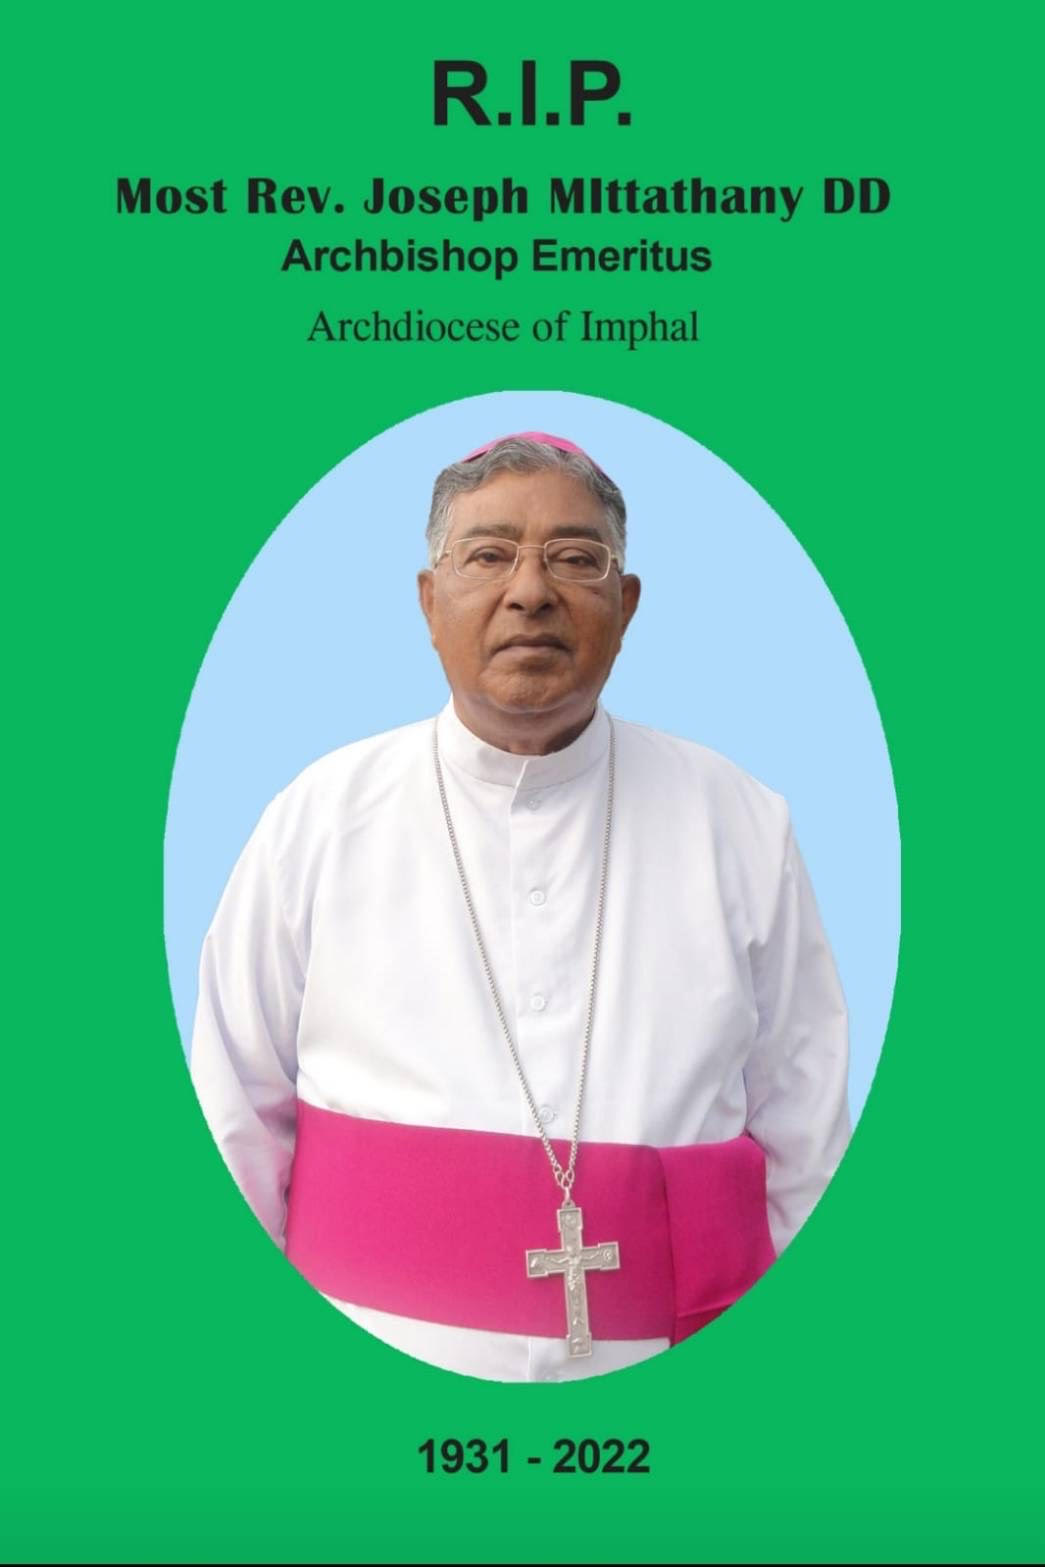  Former Archbishop Joseph Mittathany passes away 